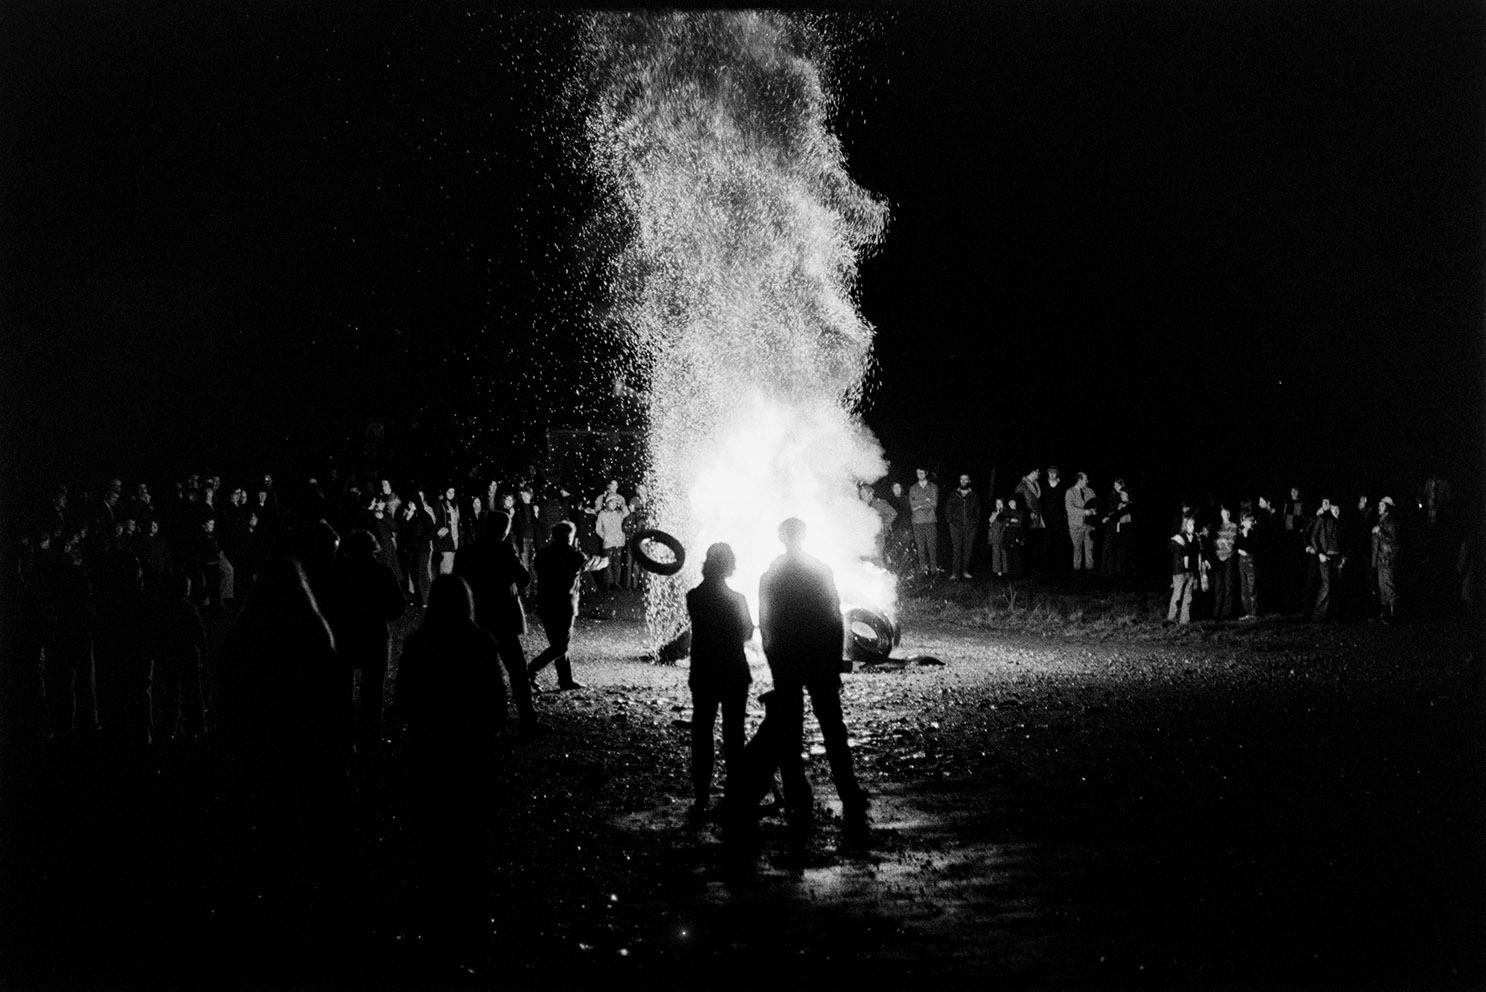 Burning tyres, Hatherleigh Carnival, November 1975